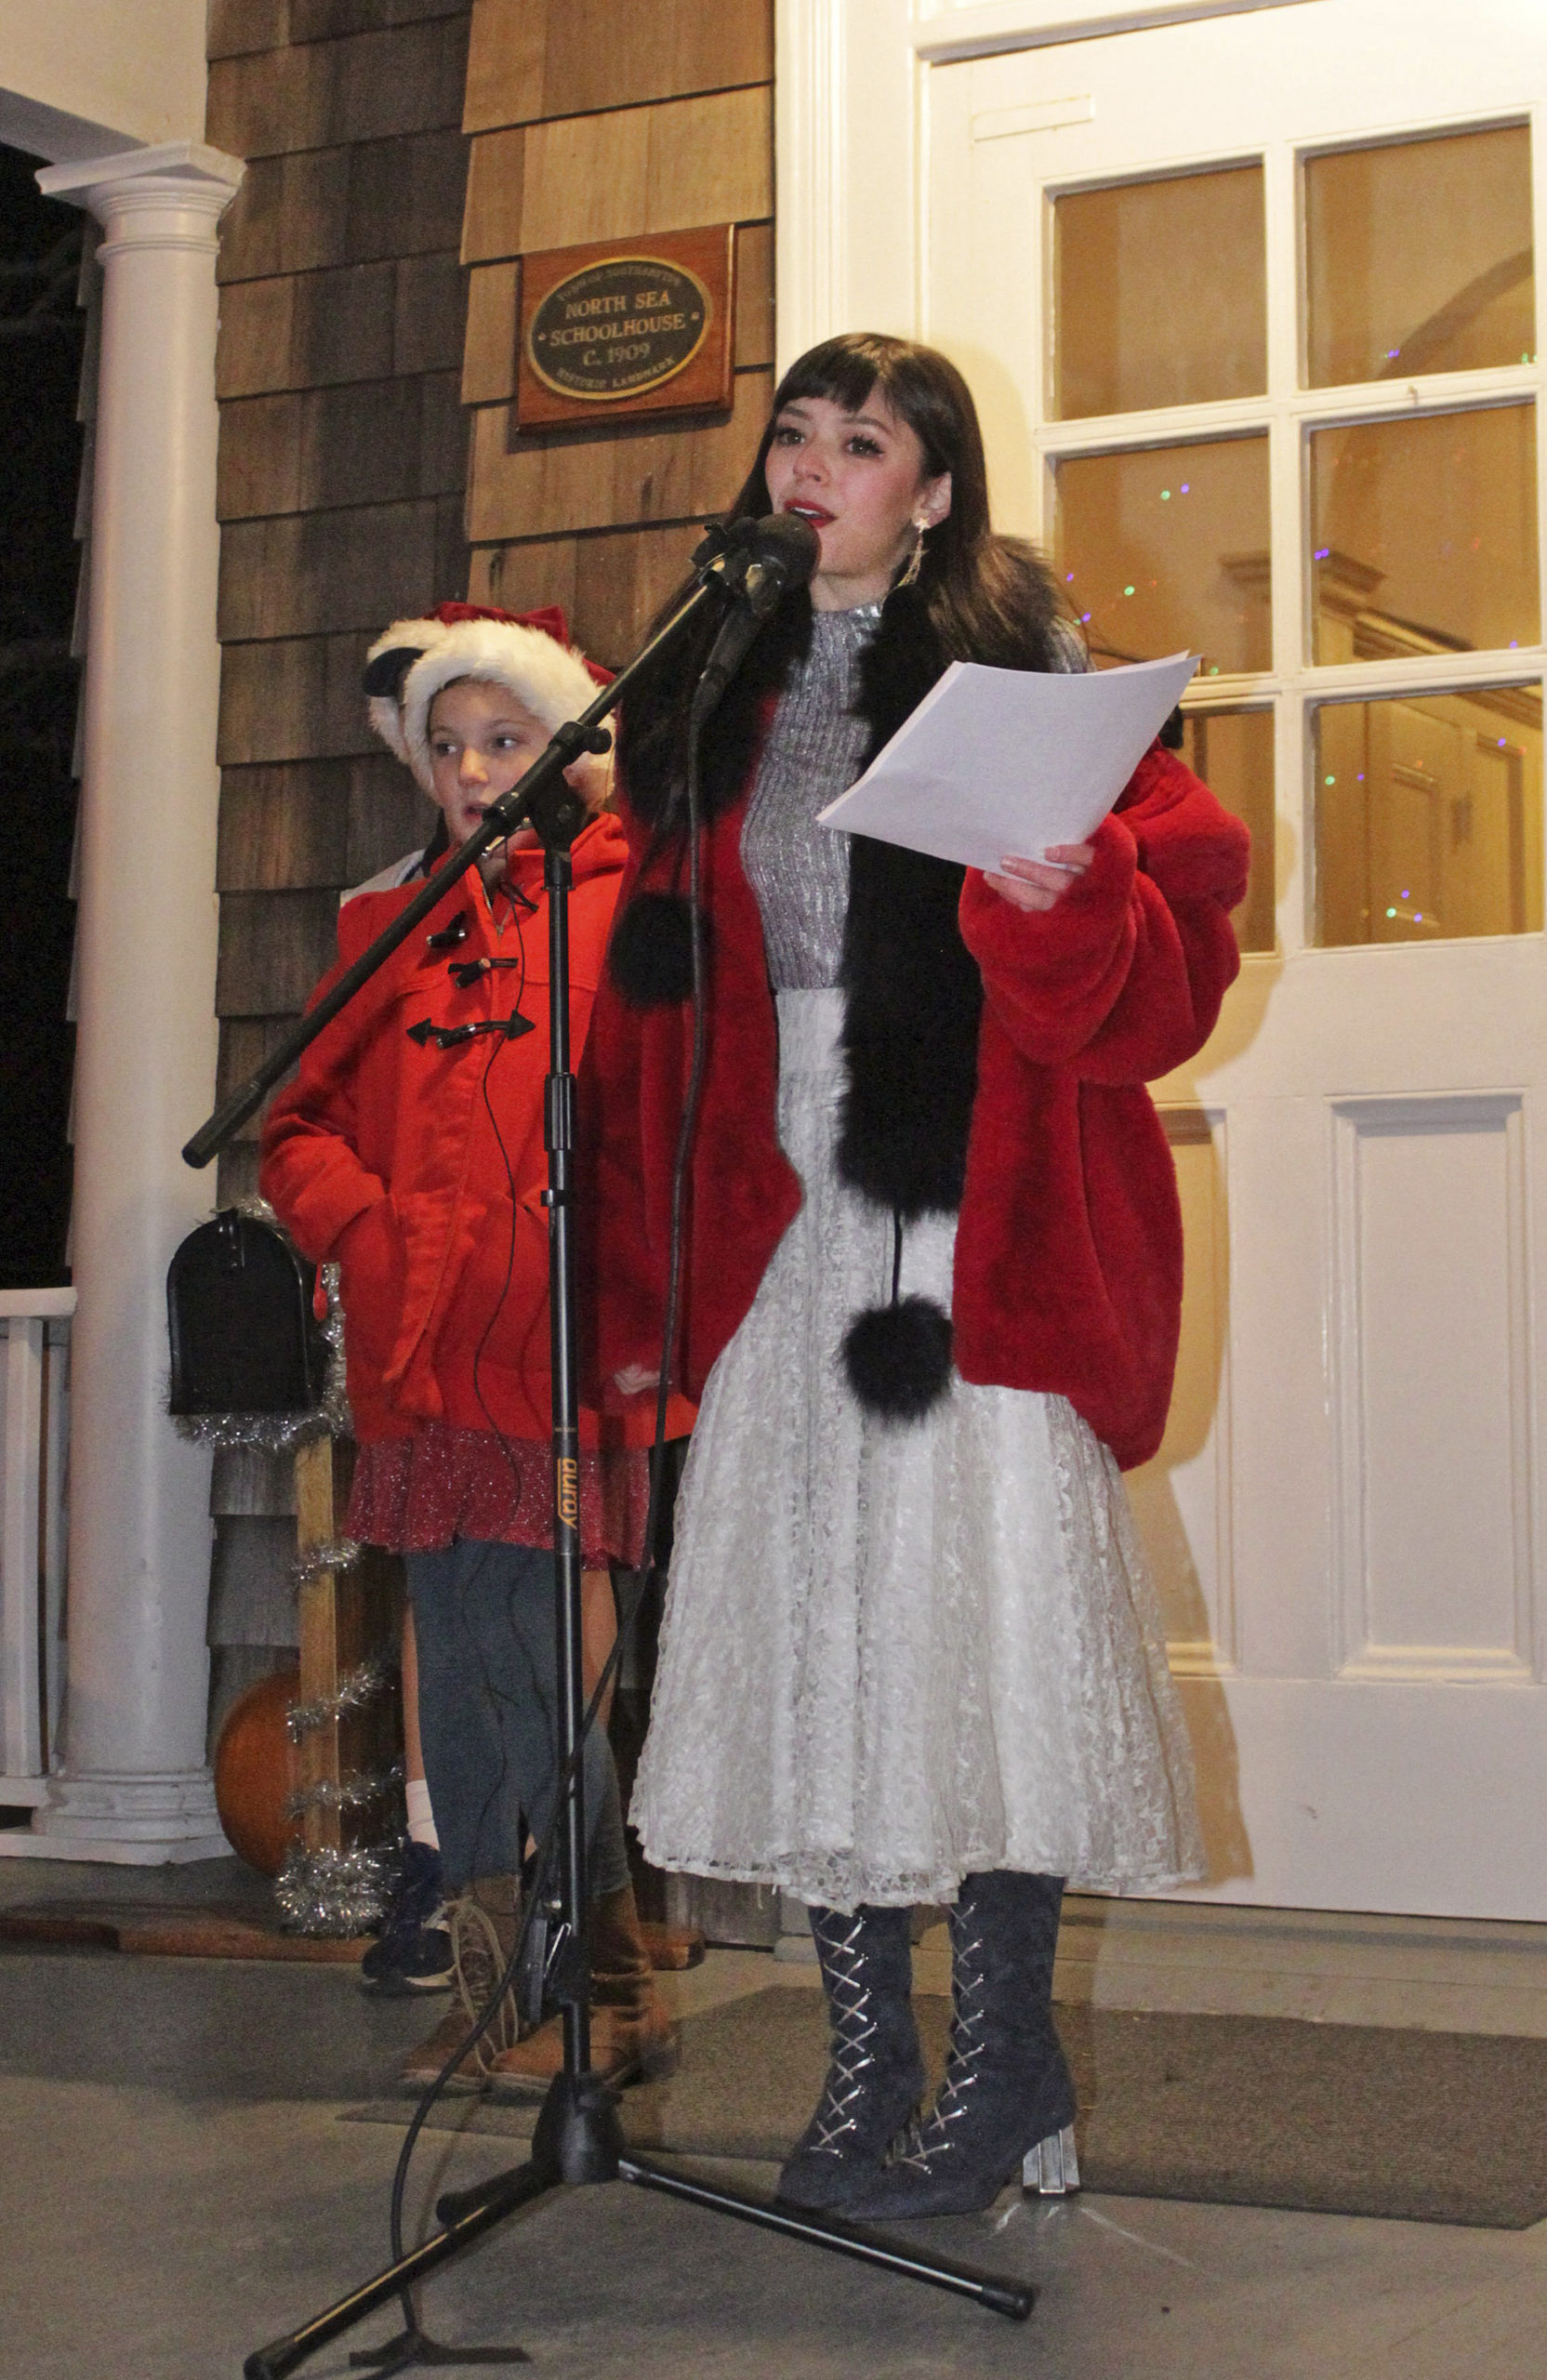 Singer Natasha Malak leads the crowd in some Christmas carols.